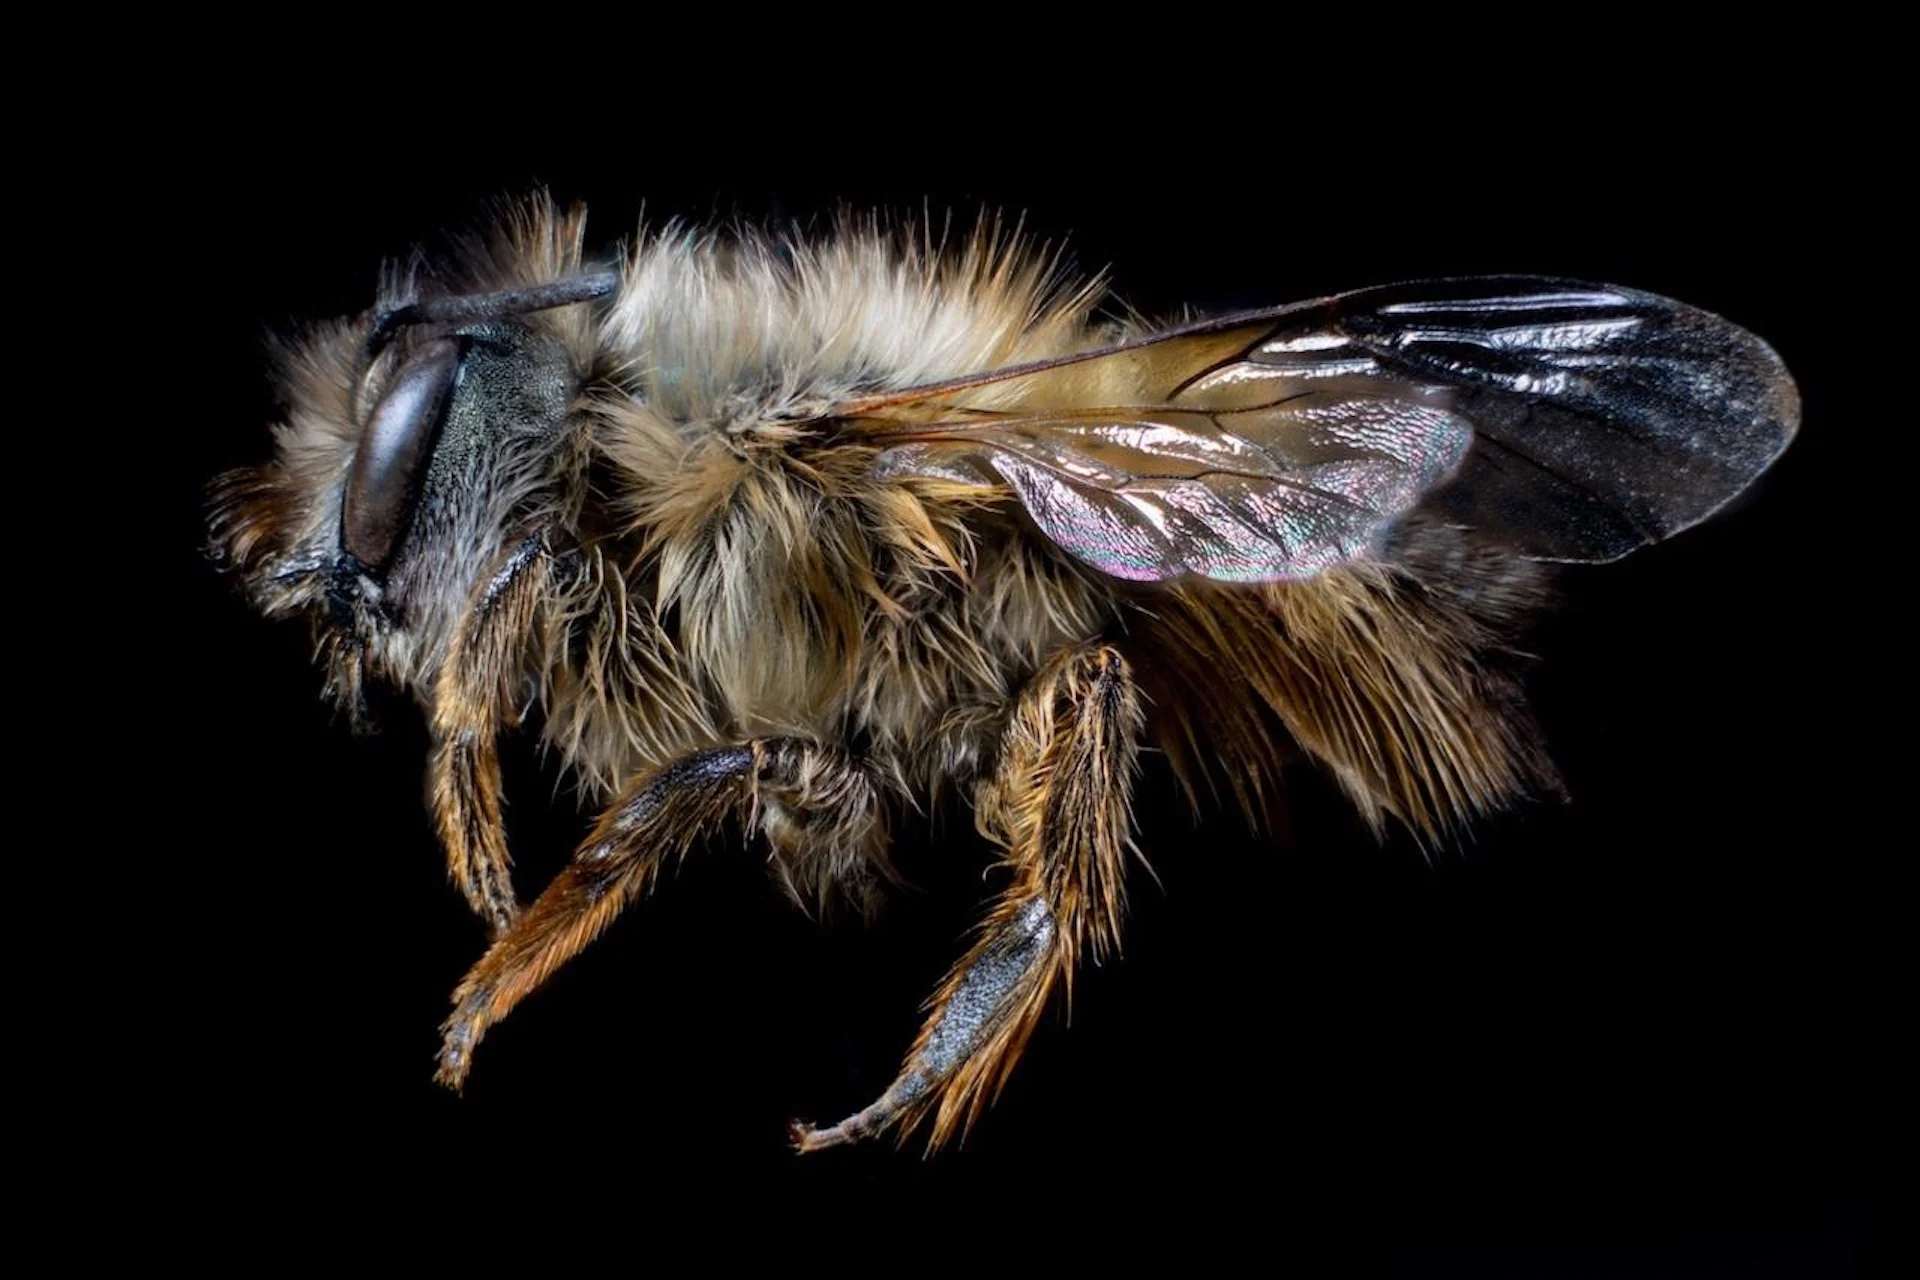 Native bee in Canada under attack from newfound invasive species